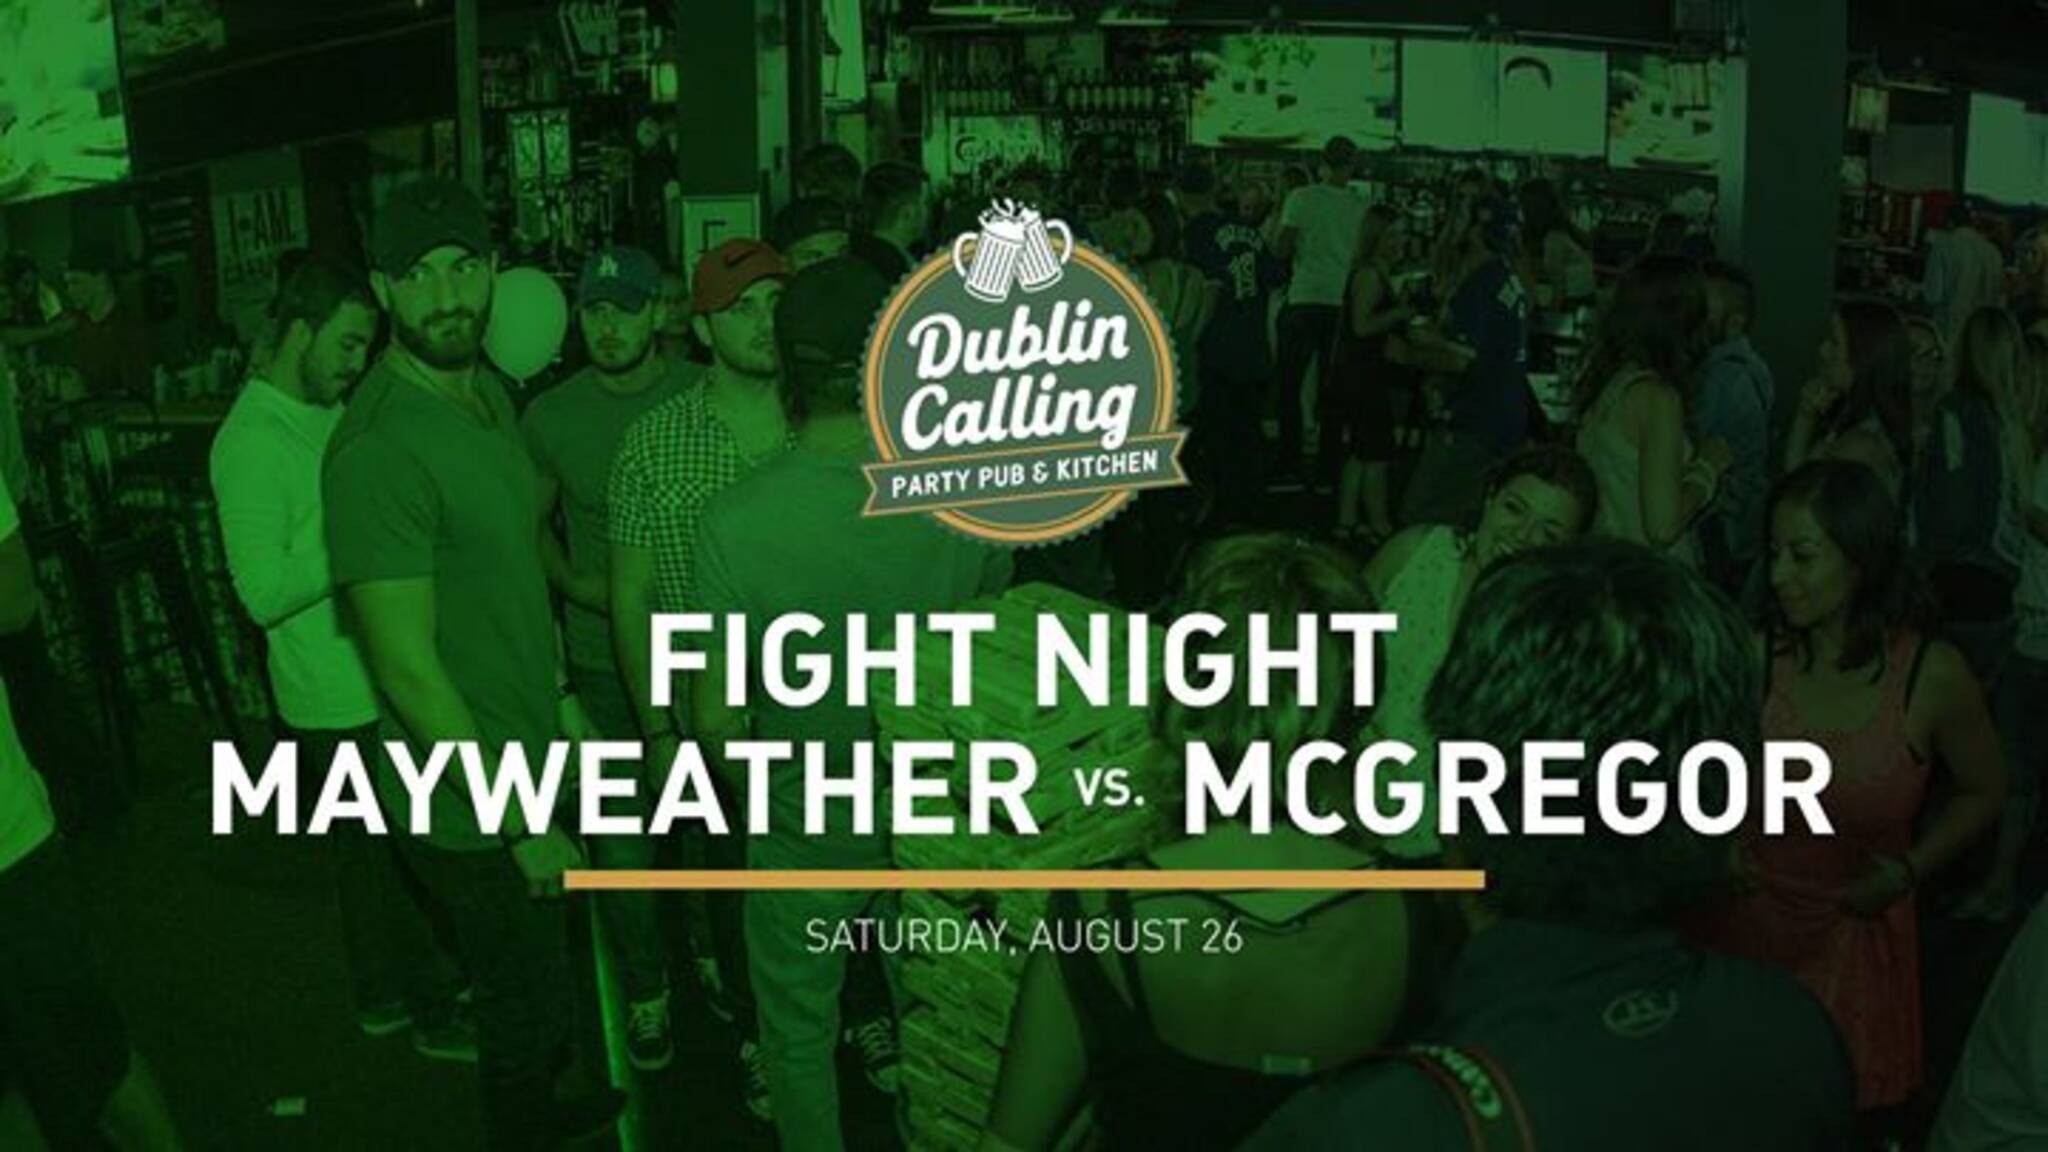 FIGHT NIGHT at Dublin Calling